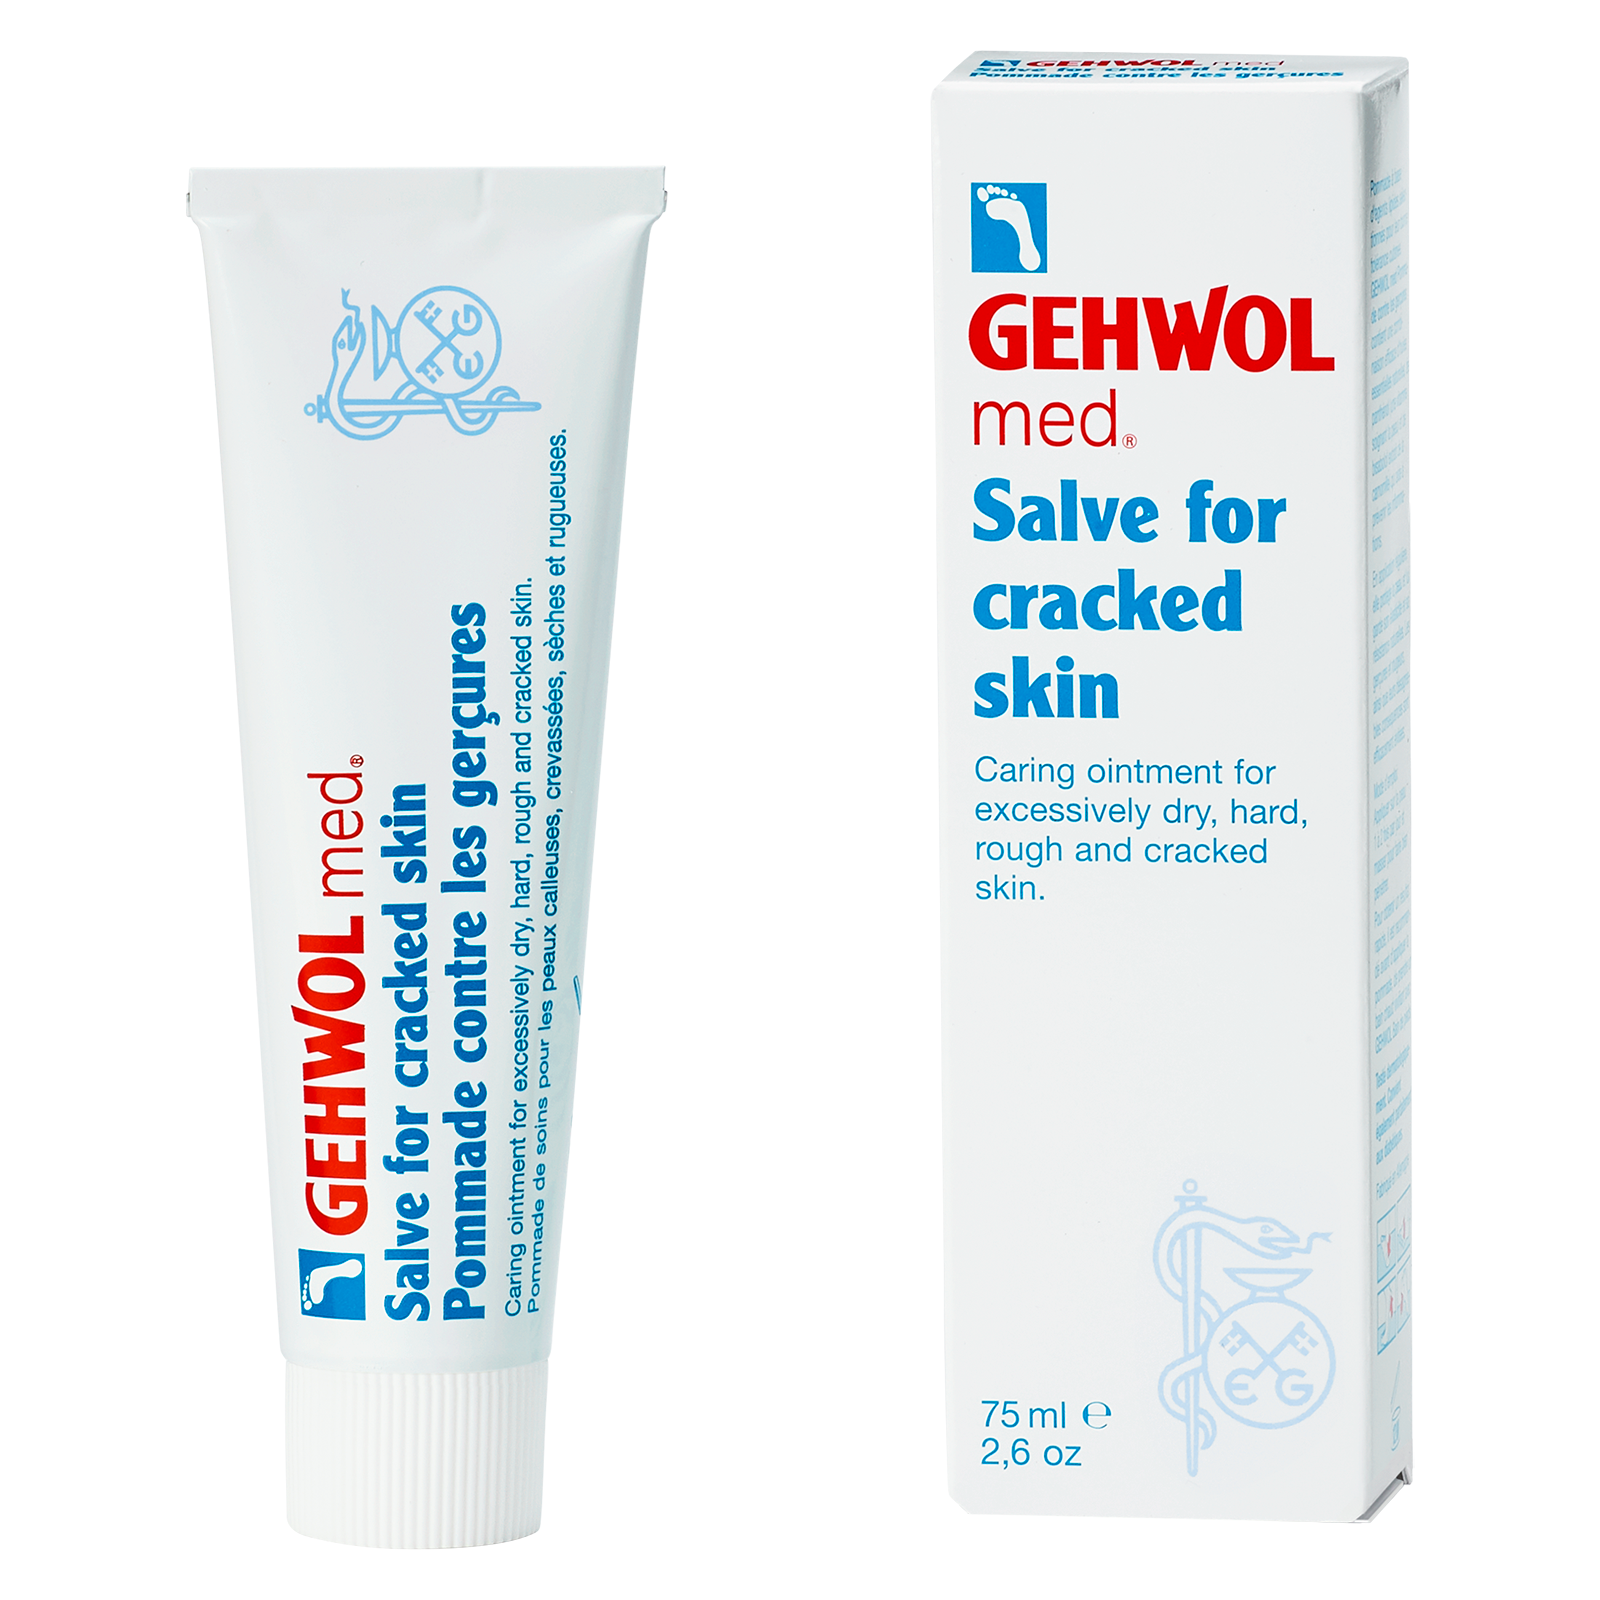 Gehwol med Salve for cracked skin Αλοιφή για σκασίματα, ανάπλαση και θρέψη 75 ml